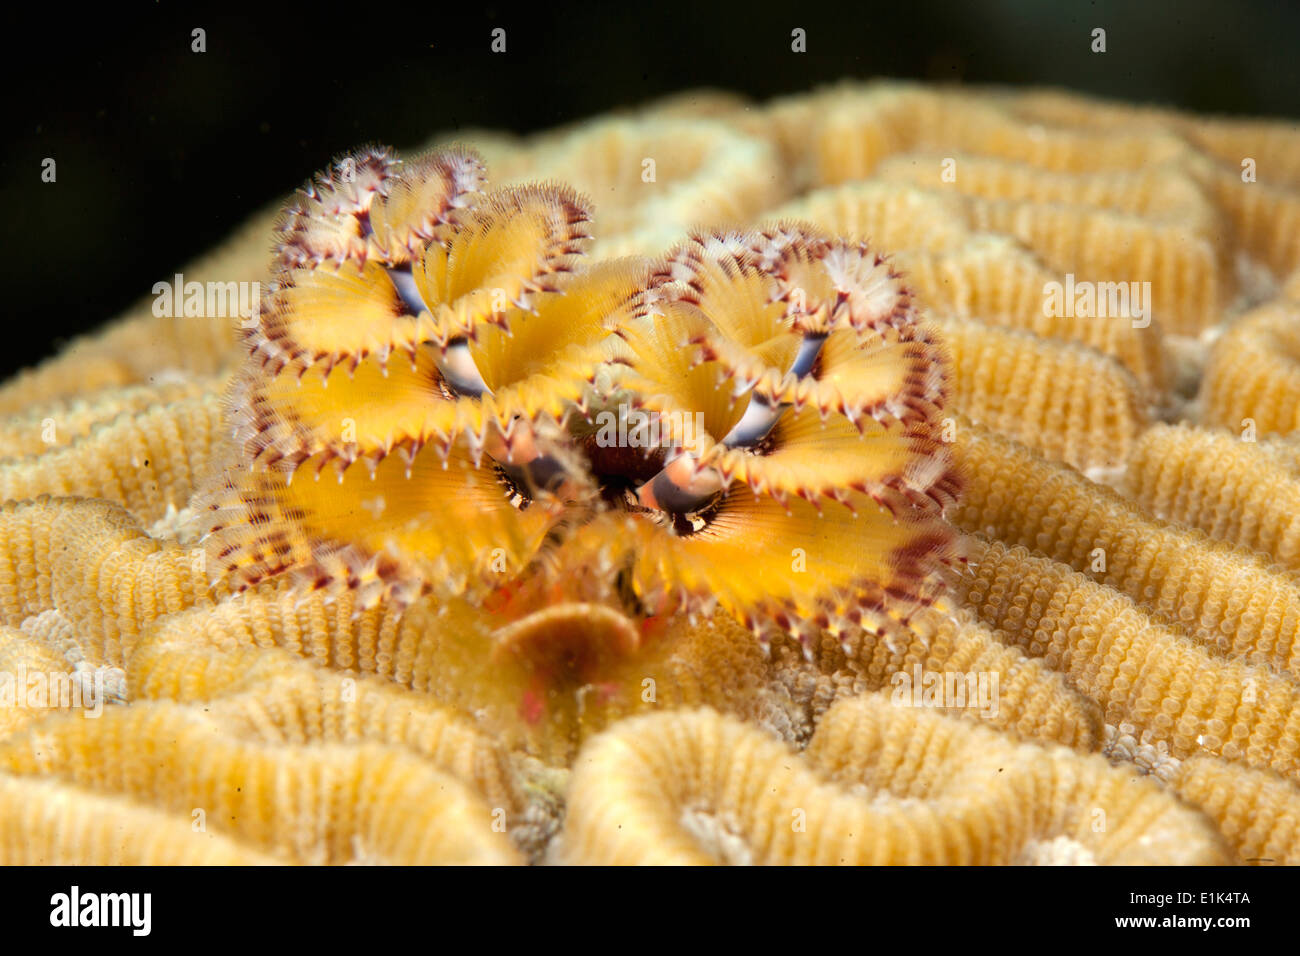 Caraibi Antille Curacao Westpunt albero di Natale worm Spirobranchus giganteus sul cervello coral Diploria strigosa nei Caraibi Foto Stock